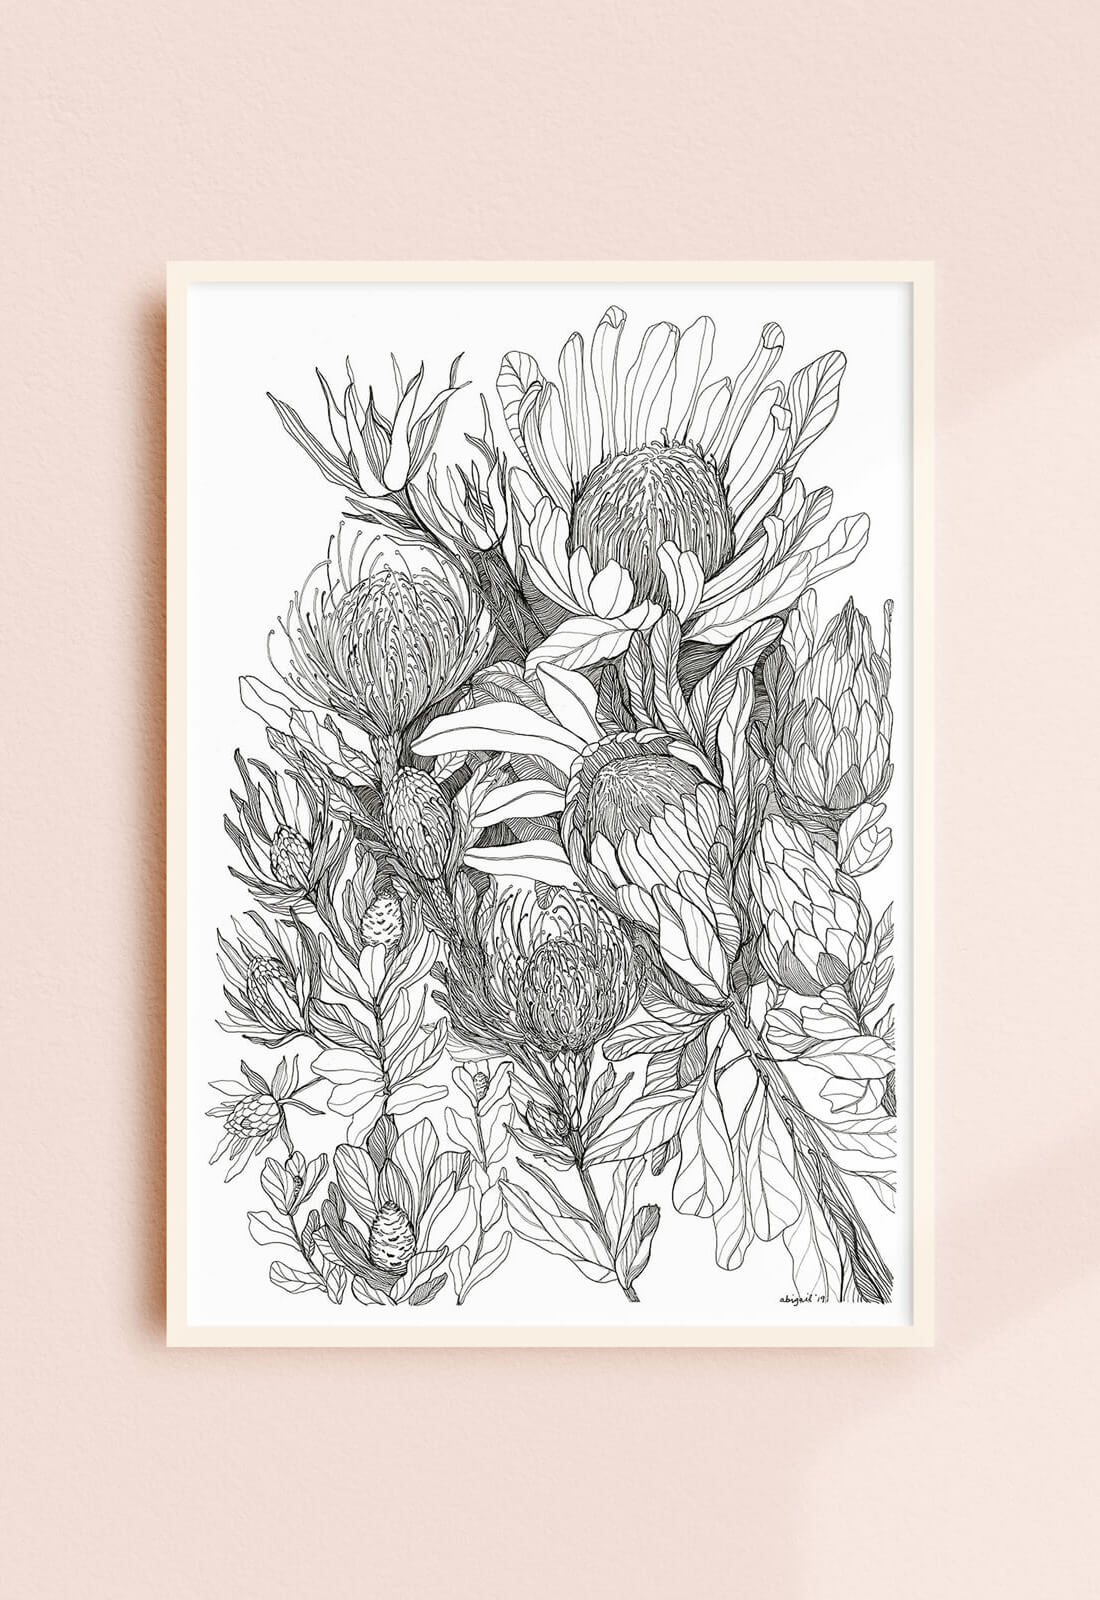 Hand Drawn Botanical Illustration Print - Protea Field - 11x14